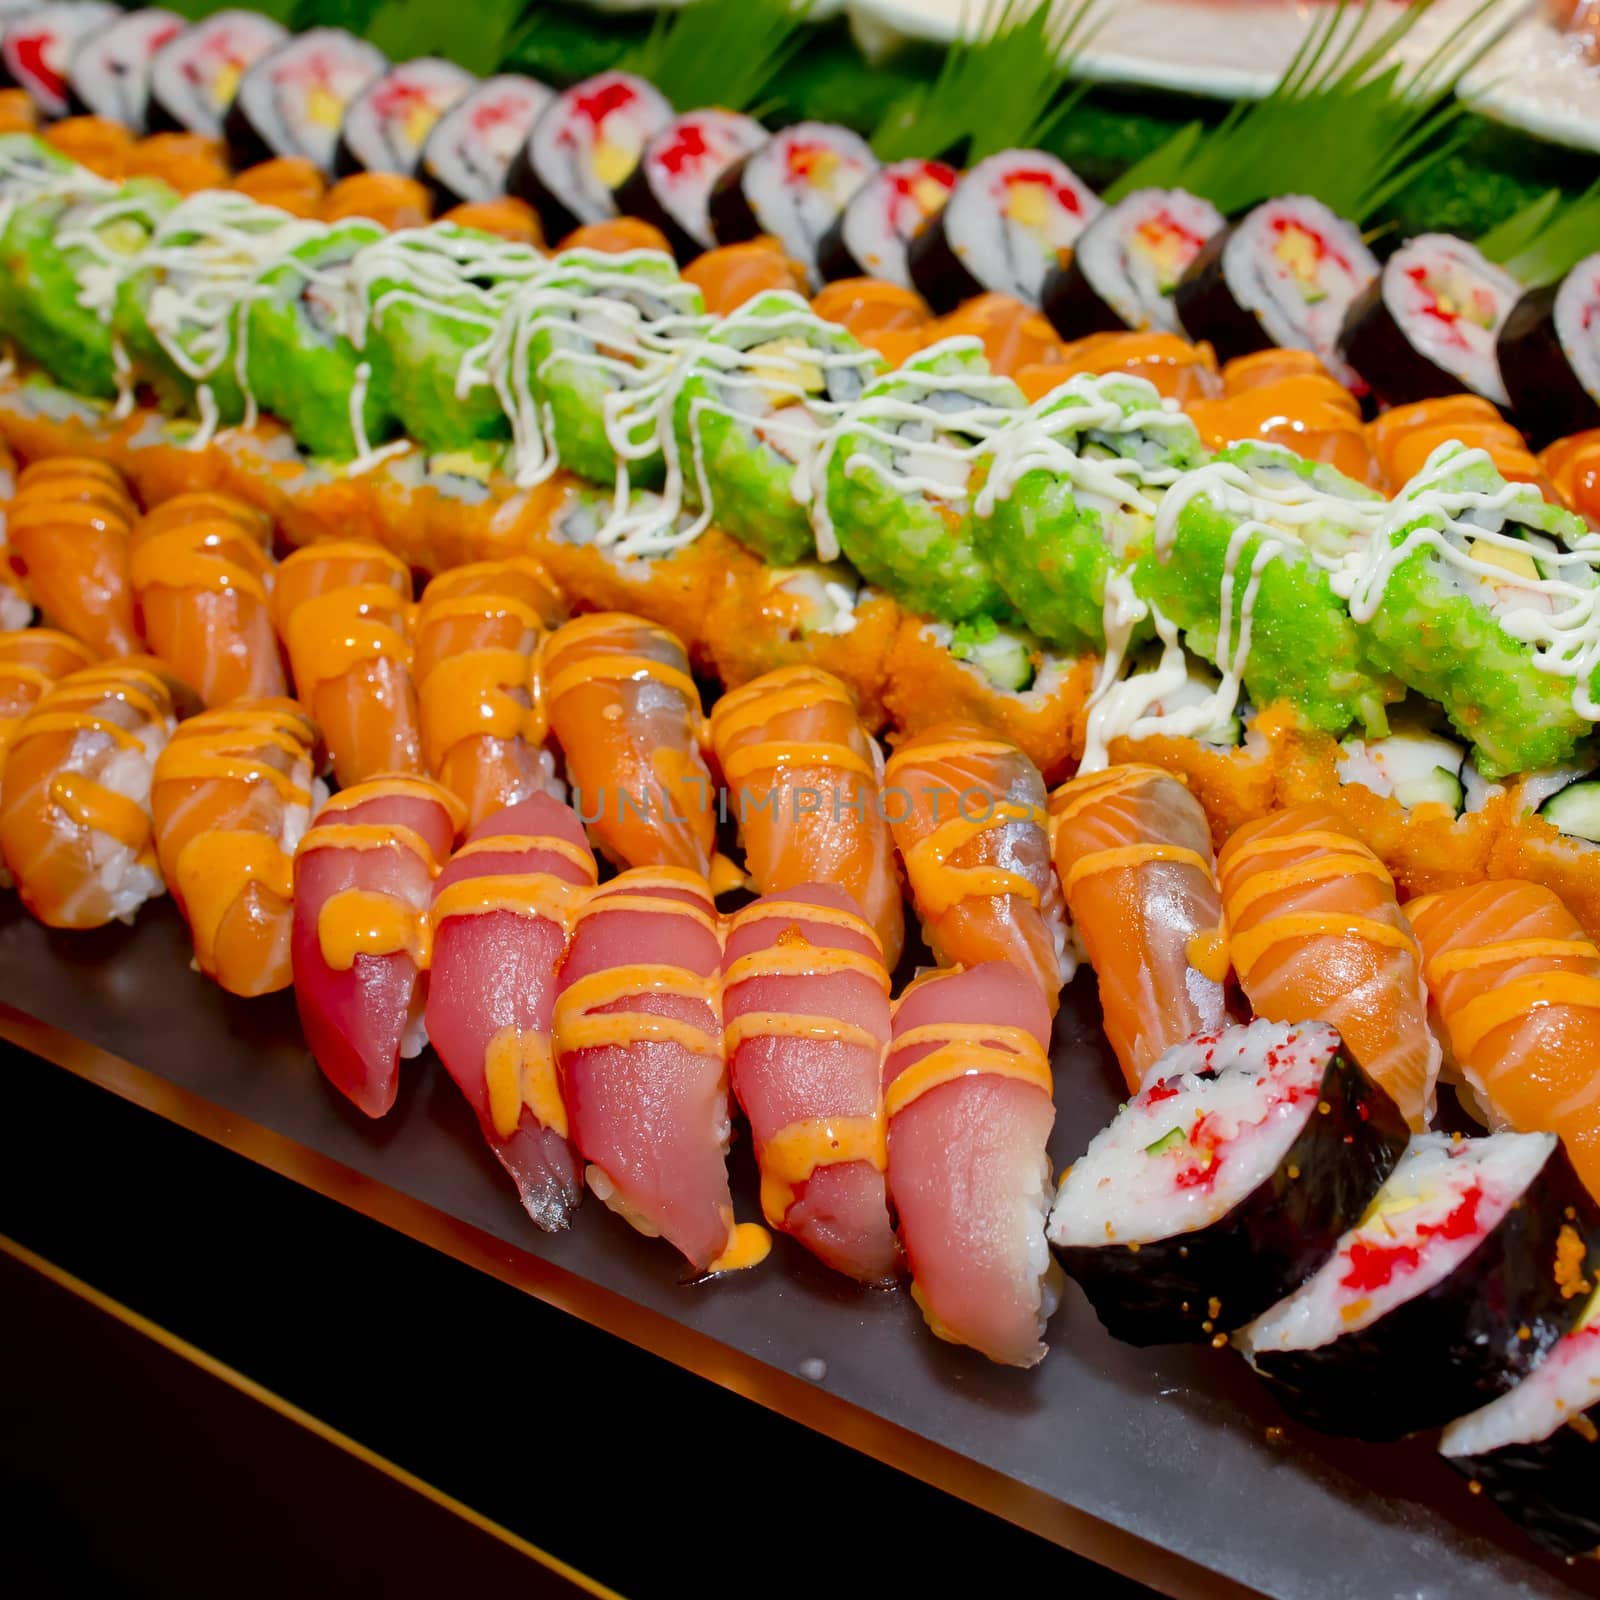 Japanese Cuisine -Buffet catering style Sushi Set in restaurant - salmon Maki Sushi and Nigiri Sushi